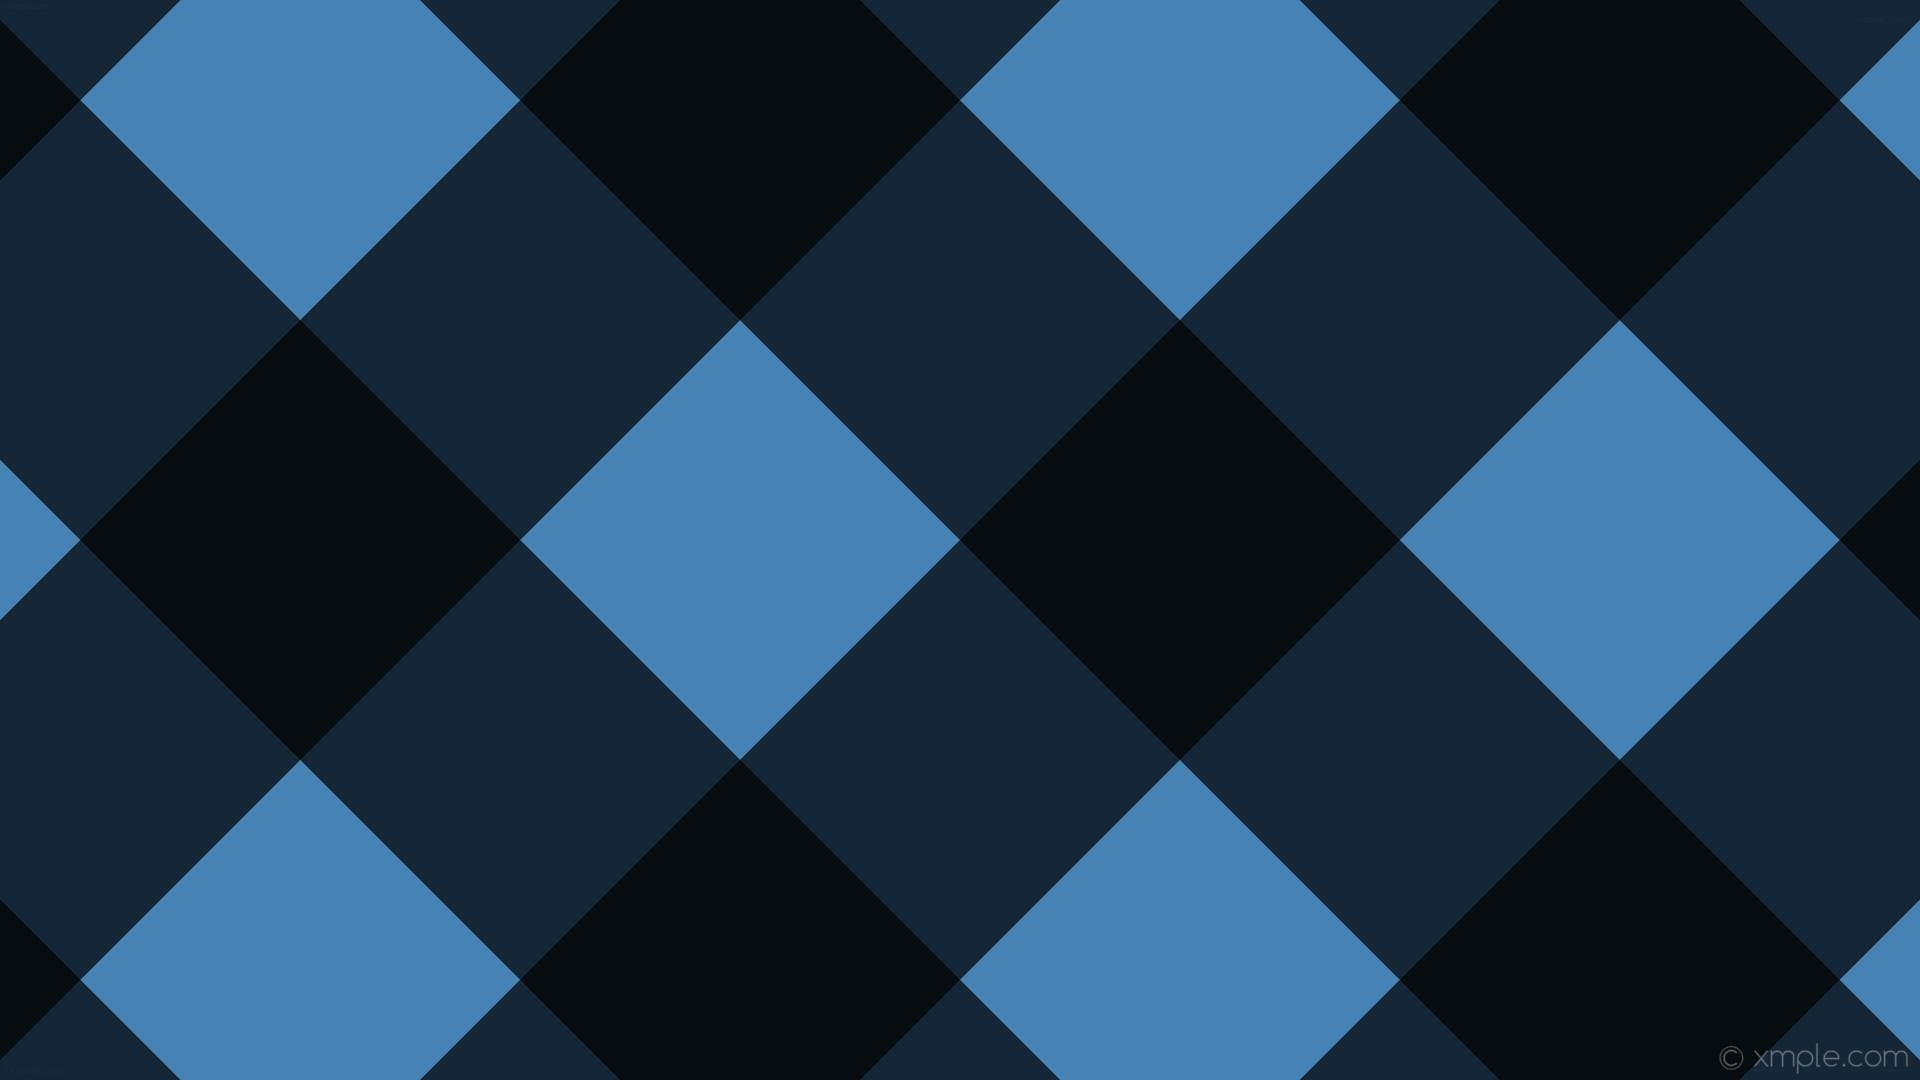 1920x1080 wallpaper checker blue striped black gingham steel blue #4682b4 #000000 45Â°  311px